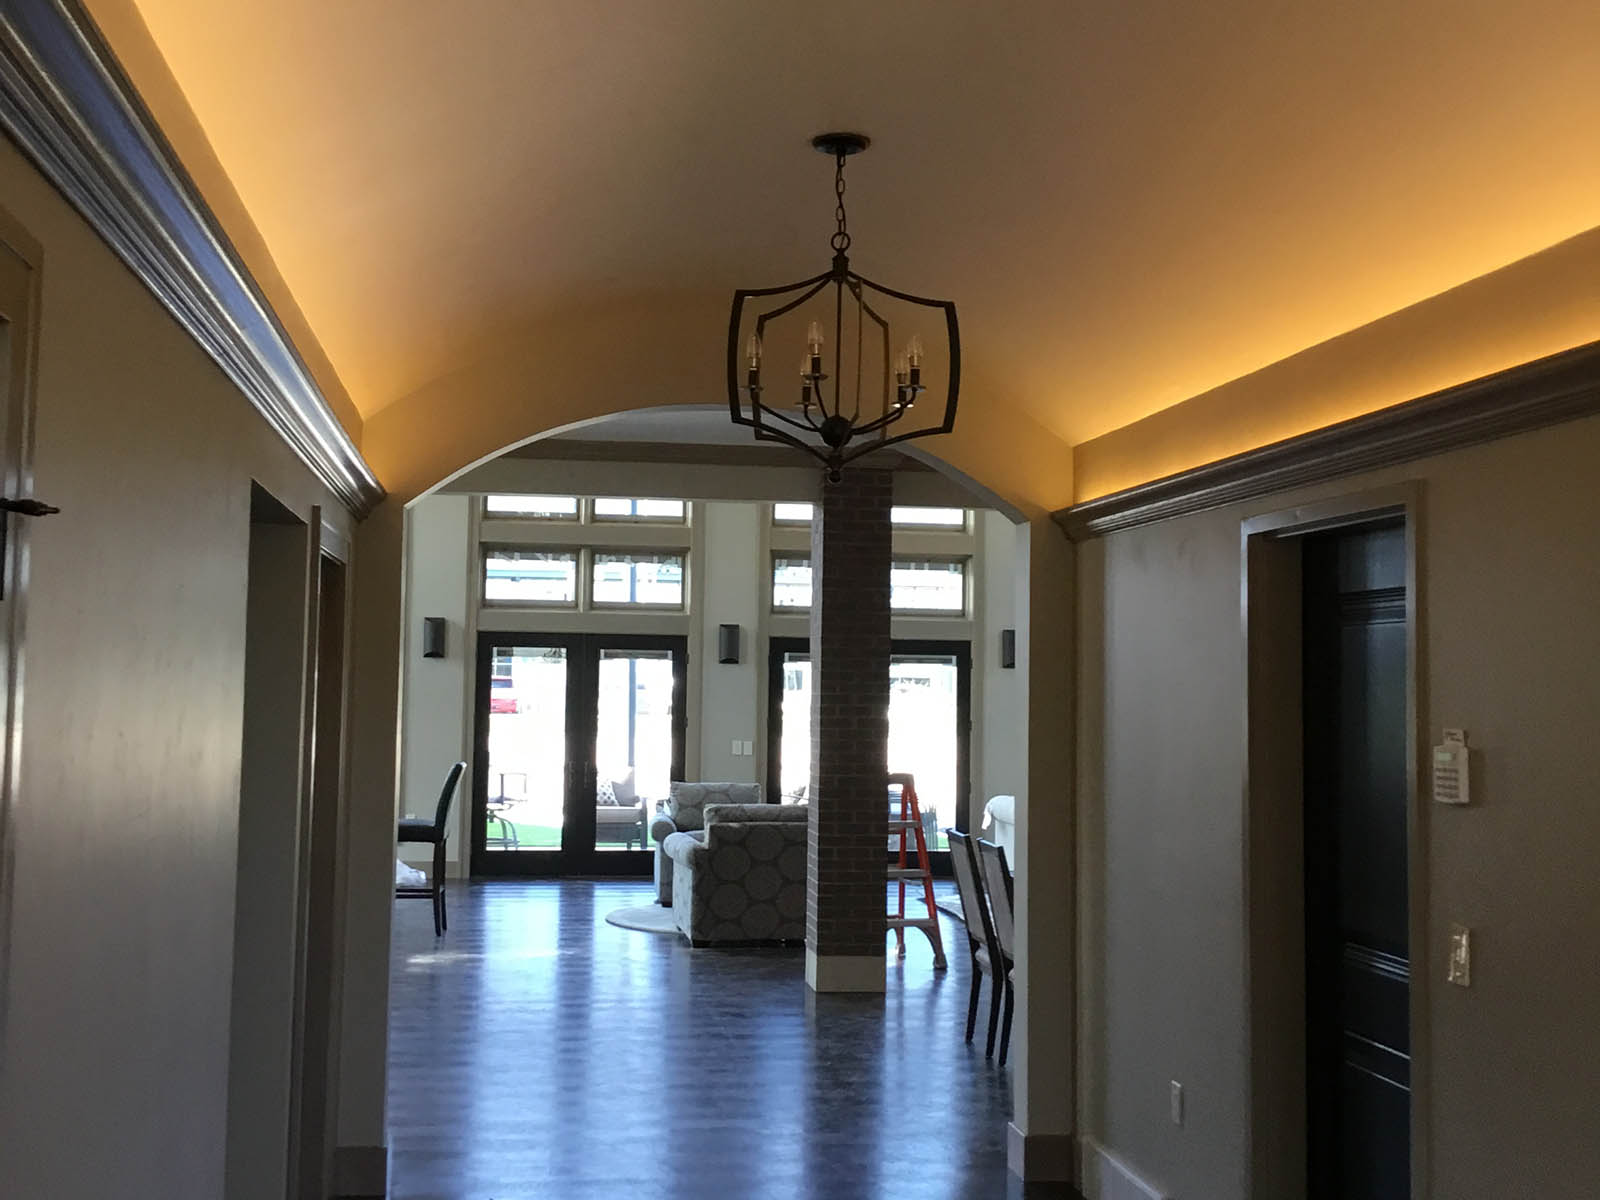 Hallway with hidden crown molding lighting and overhead hanging light